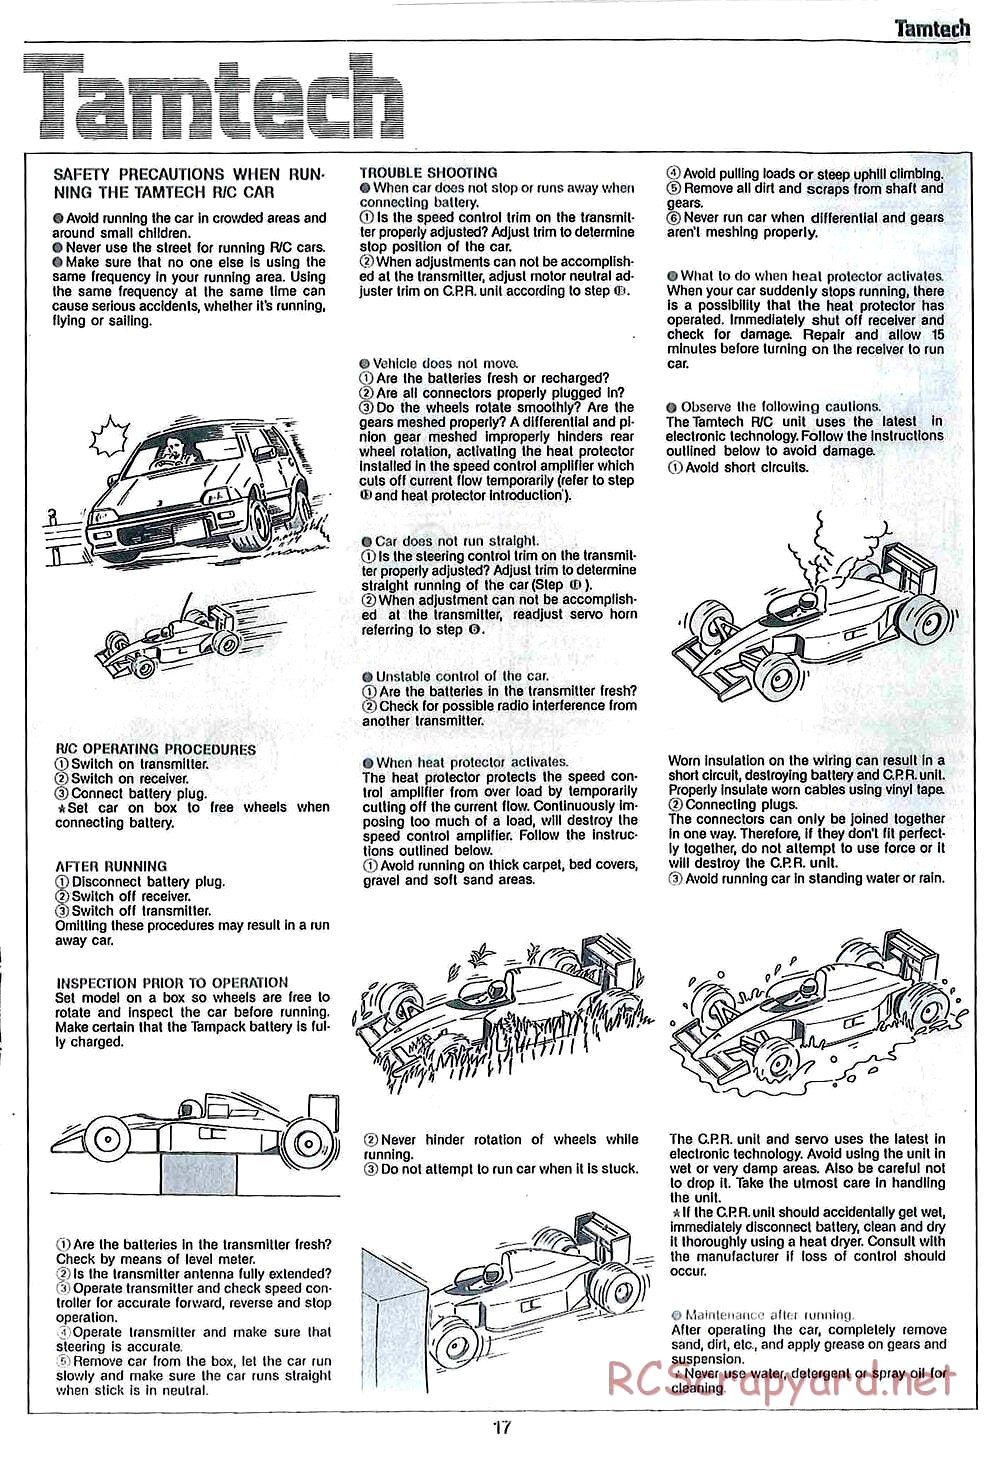 Tamiya - TamTech - F1 Chassis - Manual - Page 14